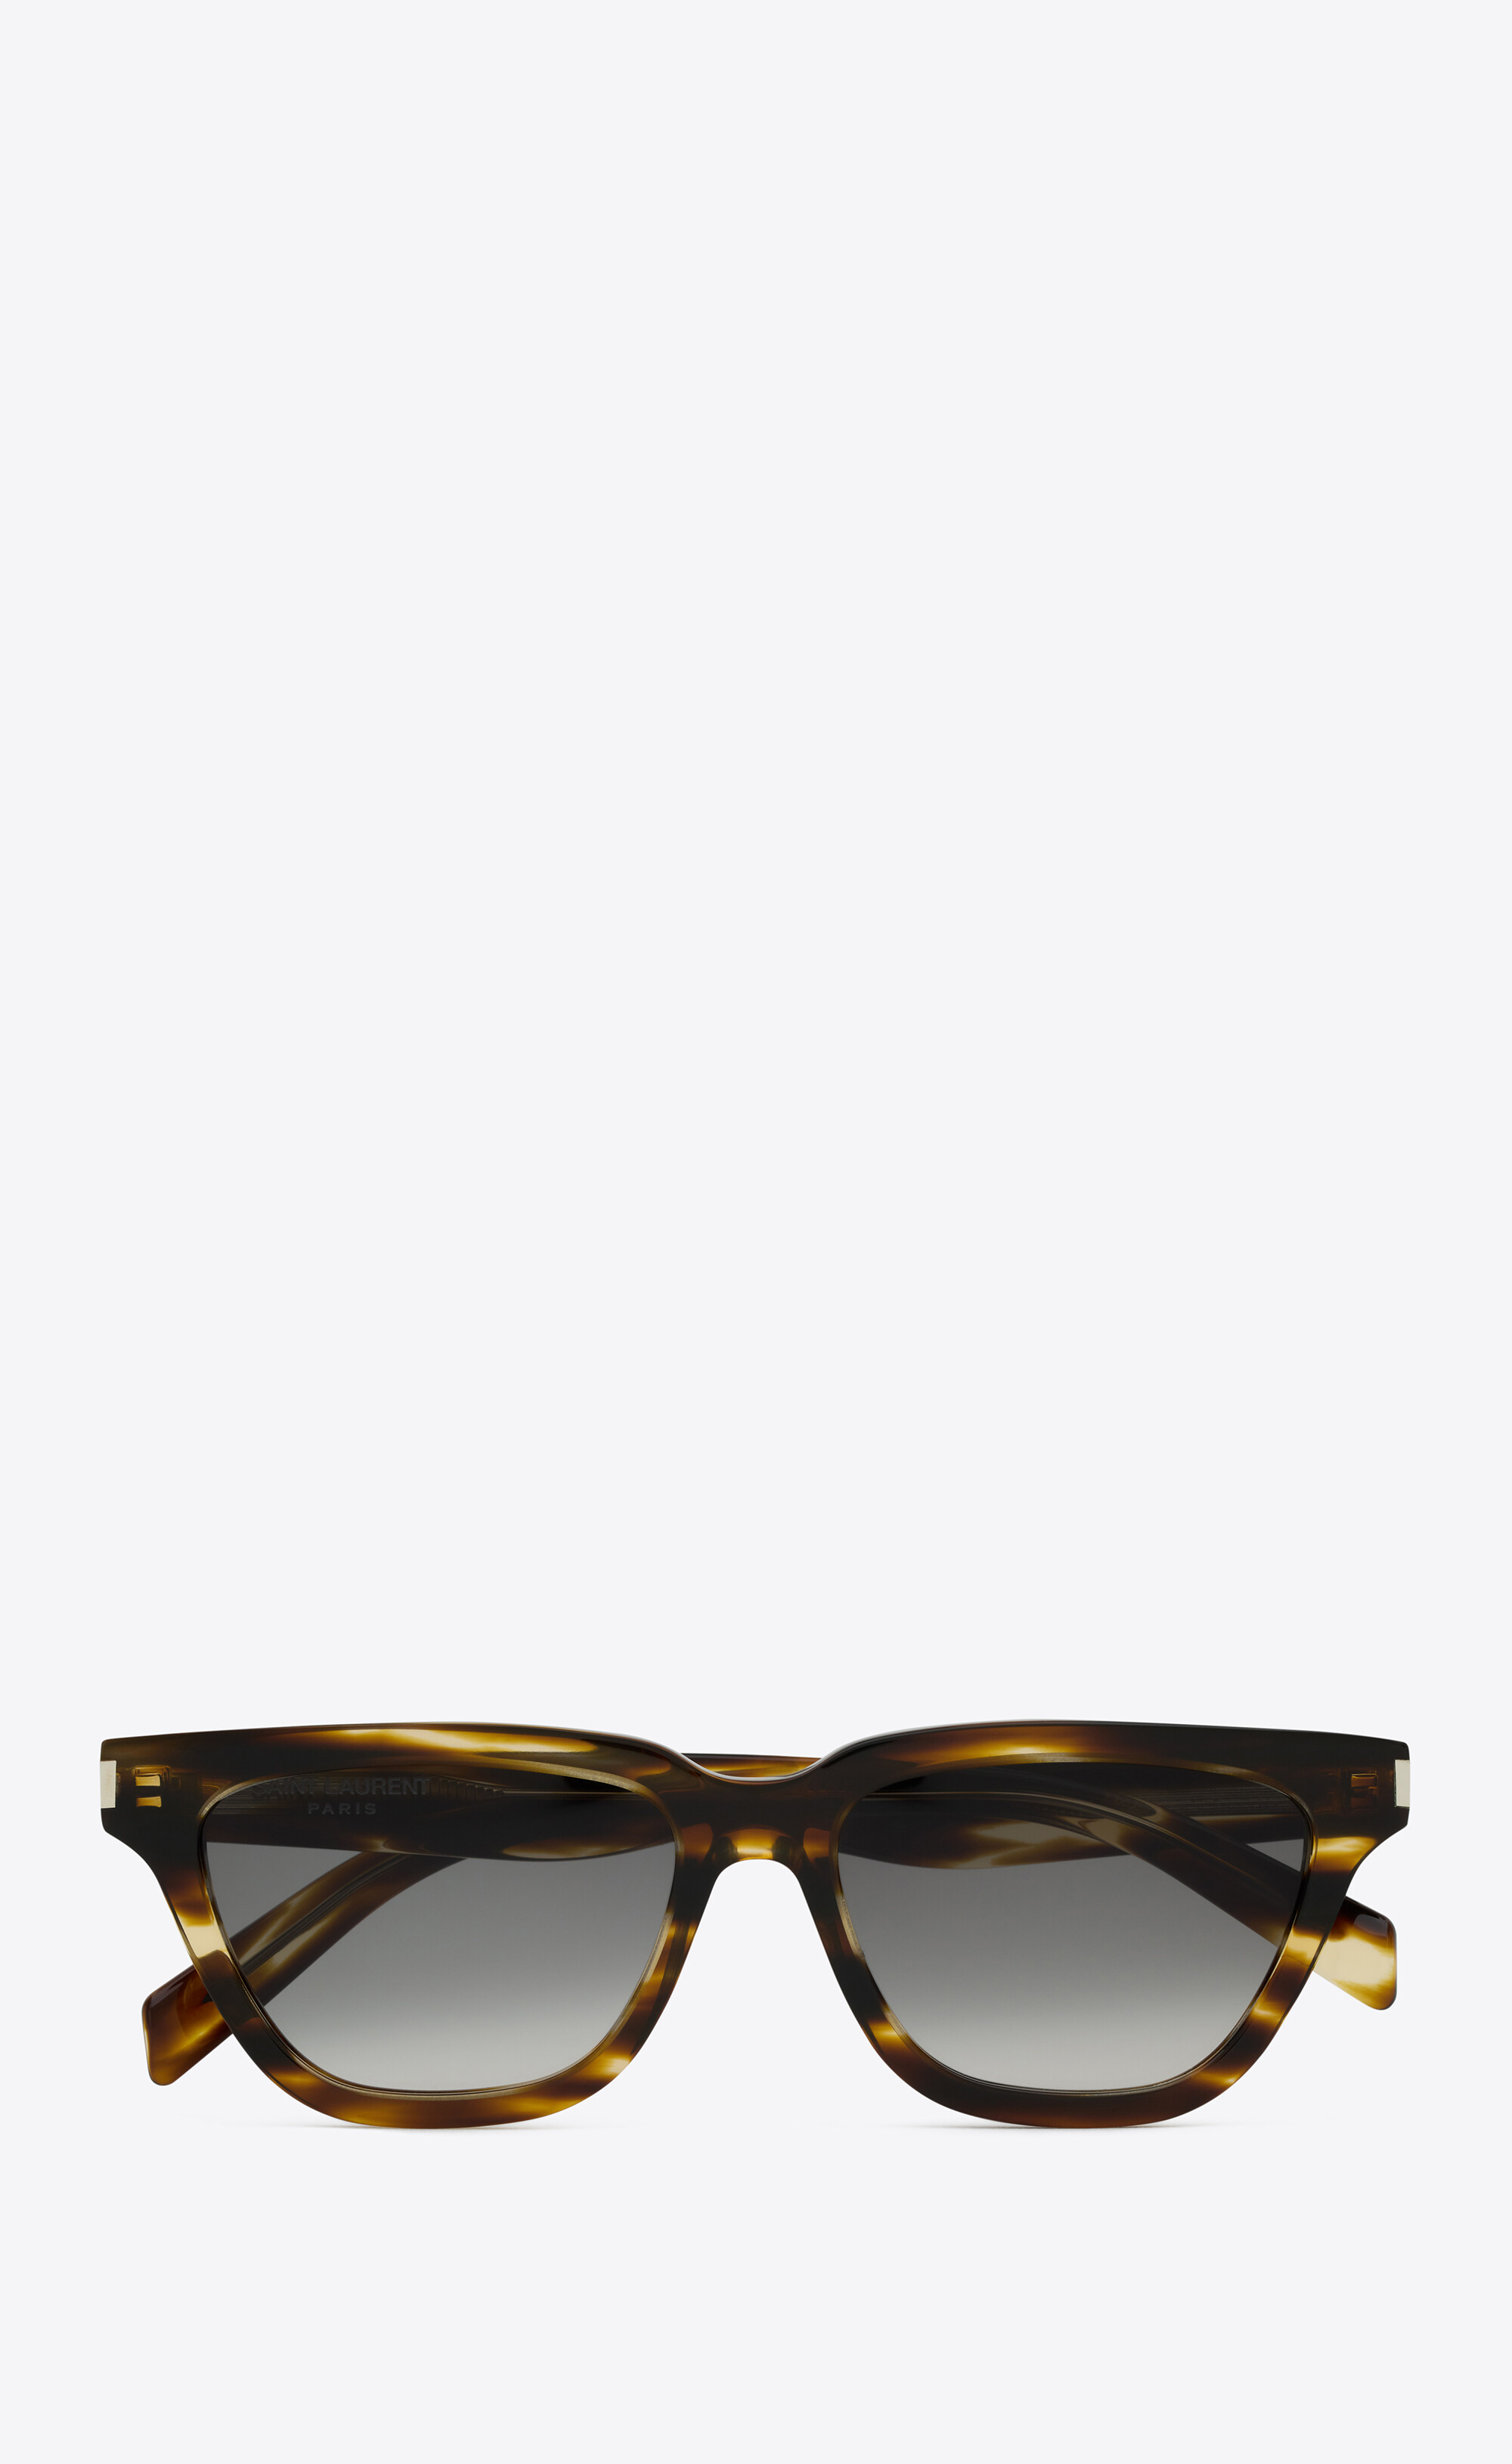 Saint Laurent Eyewear SL 462 Sulpice D-Frame Sunglasses - Black